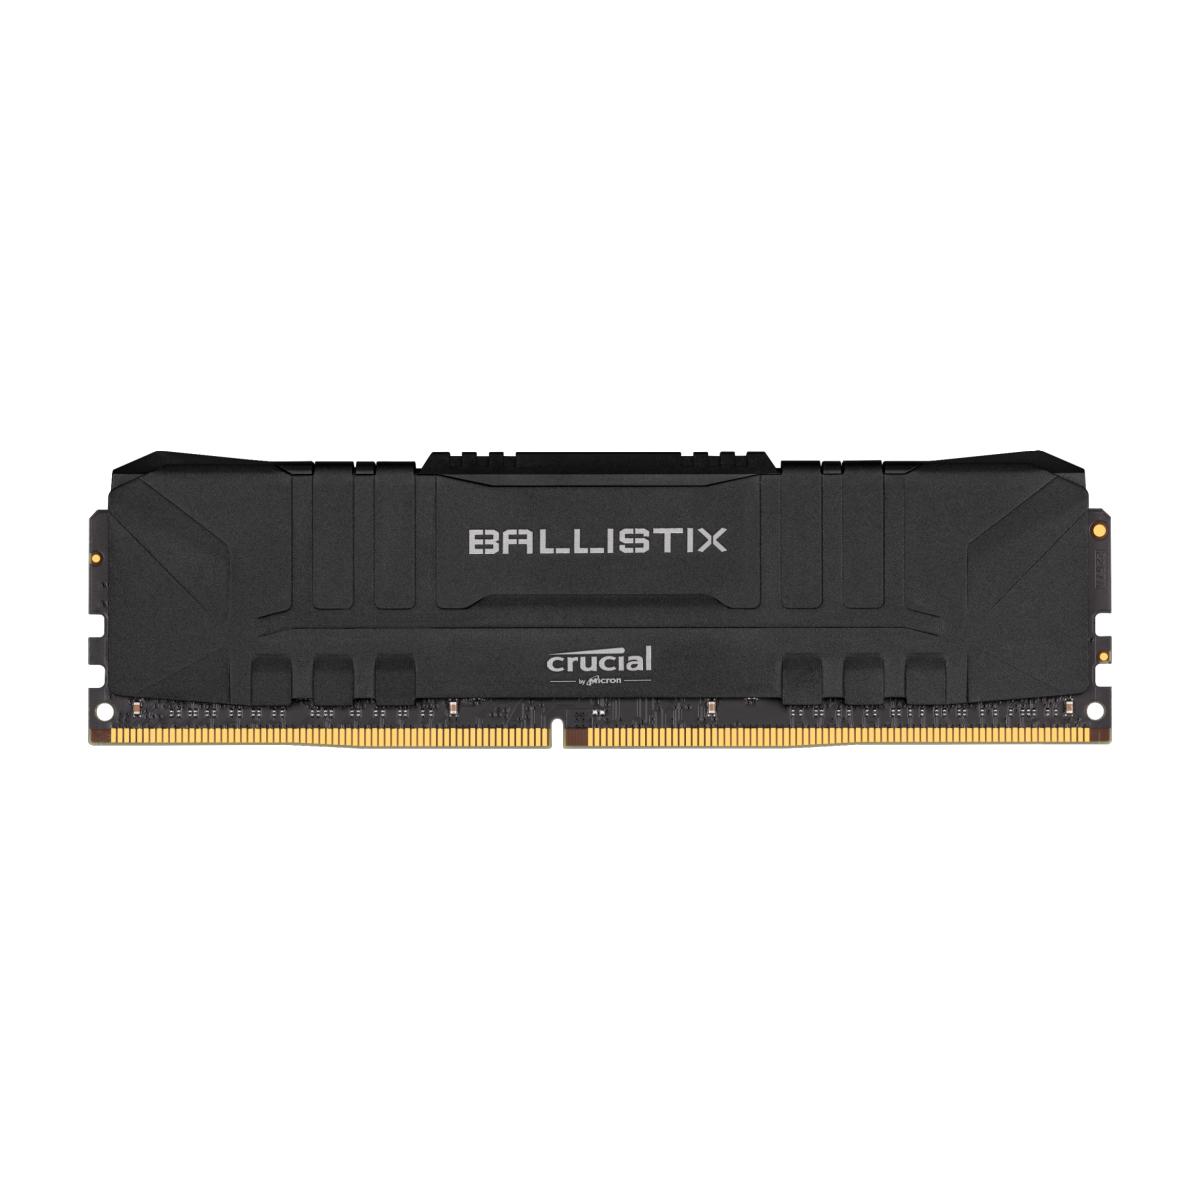 MEMORIA CRUCIAL BELLISTIX 8GB DDR4 3200 MHZ NEGRO BL8G32C16U4B UPC 0649528824110 - CRUCIAL